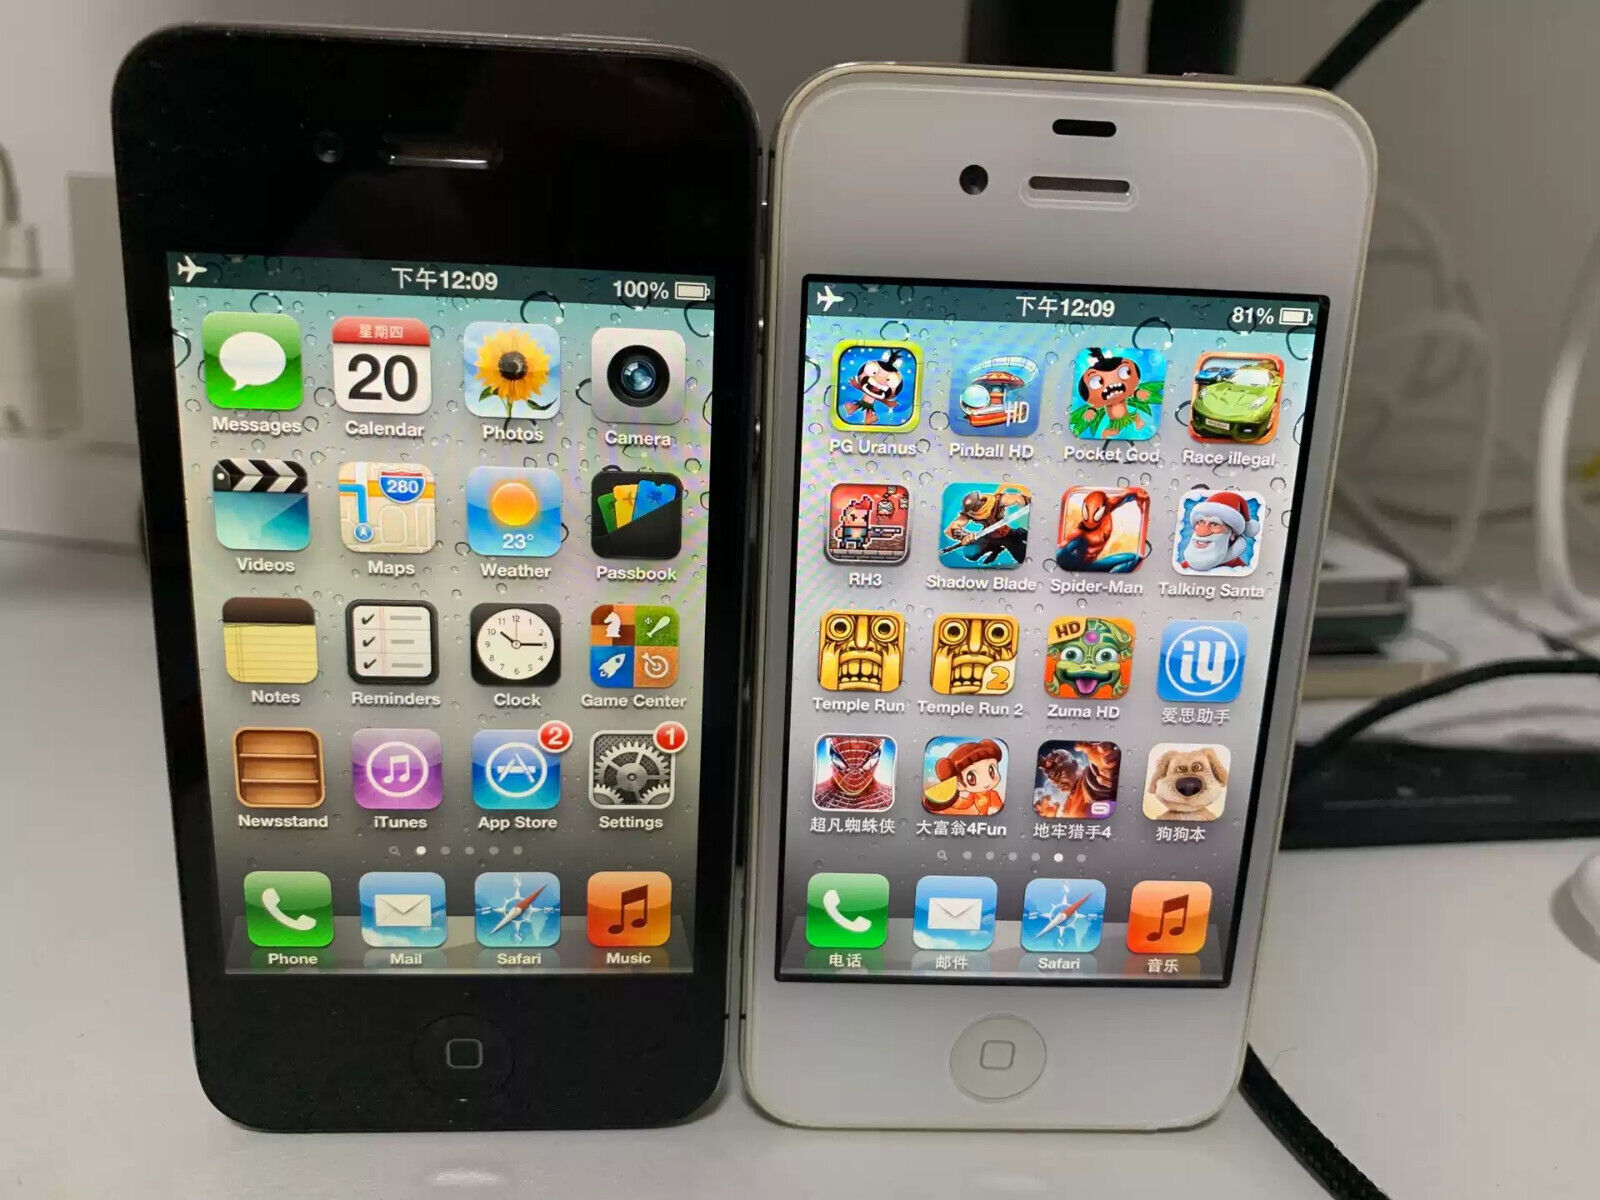 apple-iphone-4s-pre-orders-top-1-million-in-24-hours